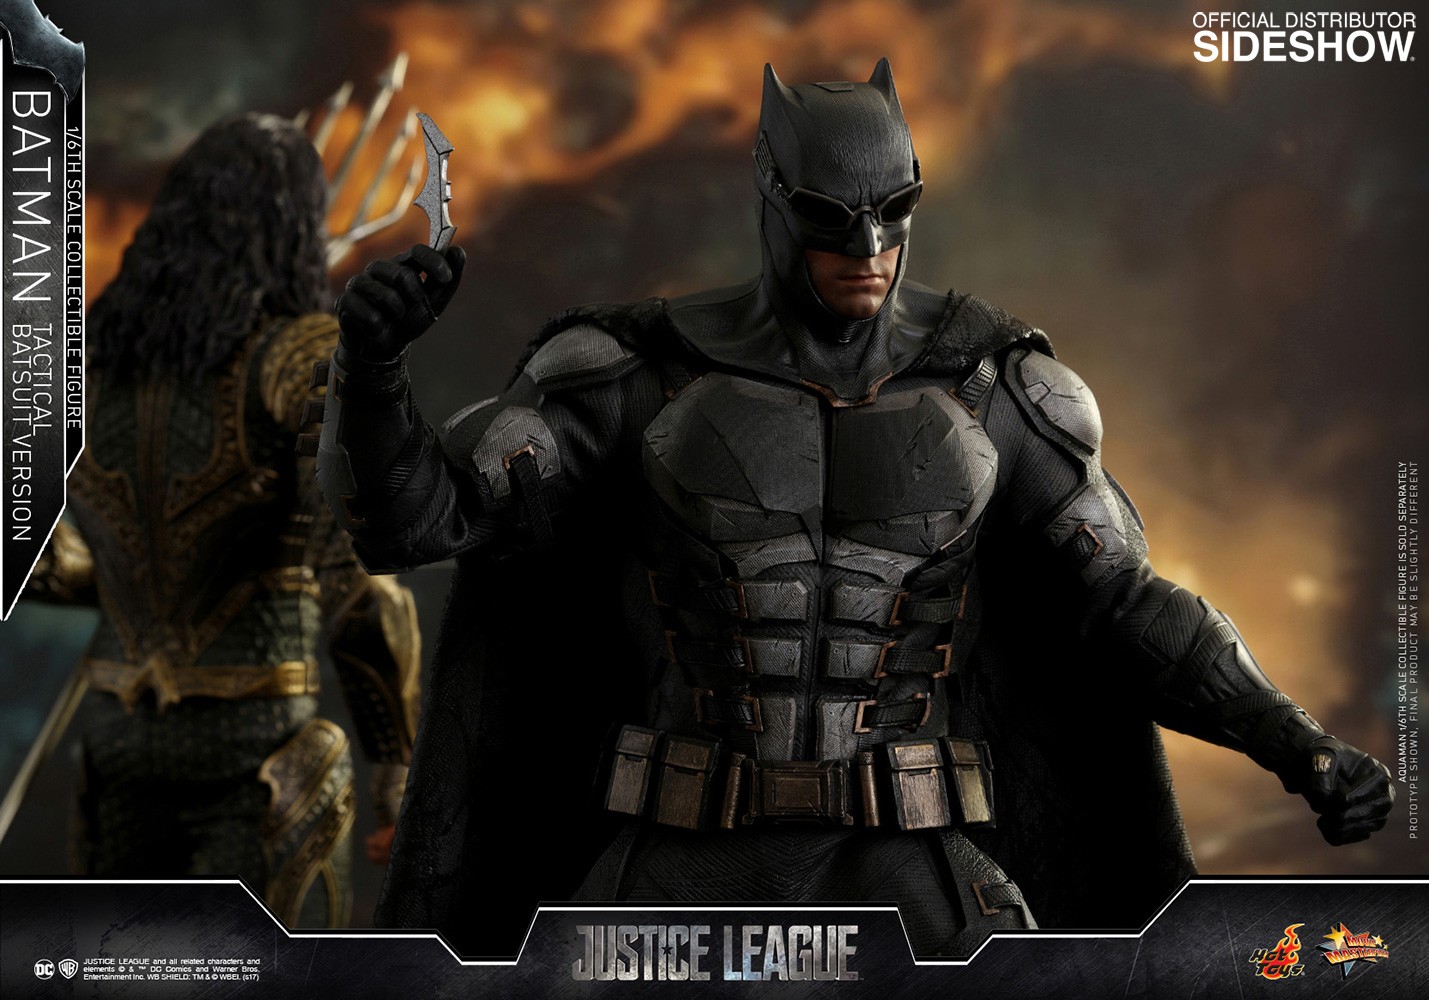 Batman Tactical Batsuit Version Collector Edition (Prototype Shown) View 18